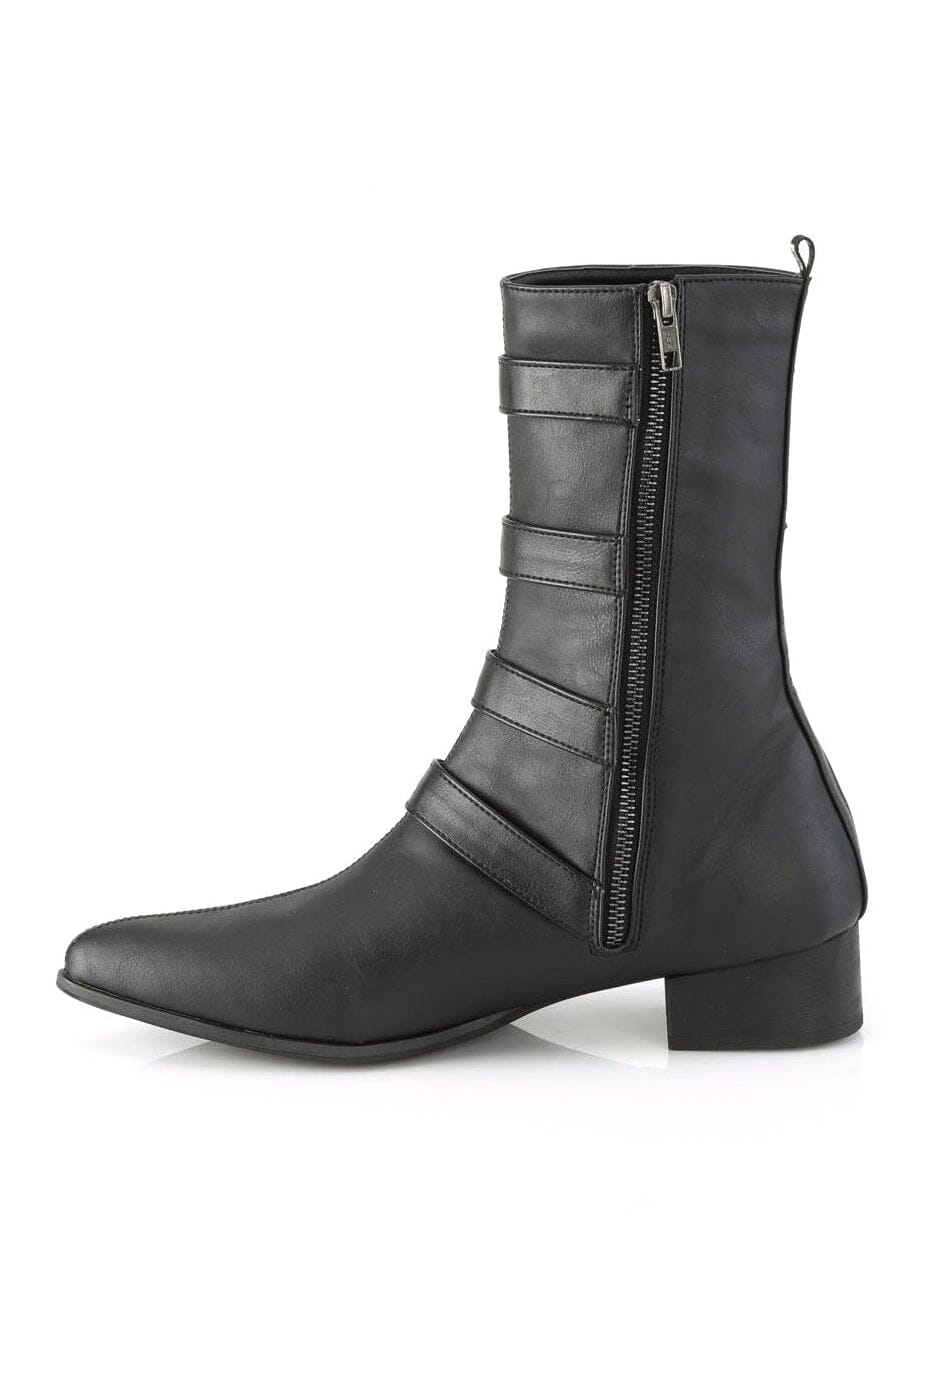 WARLOCK-110-B Black Vegan Leather Knee Boot-Knee Boots-Demonia-SEXYSHOES.COM